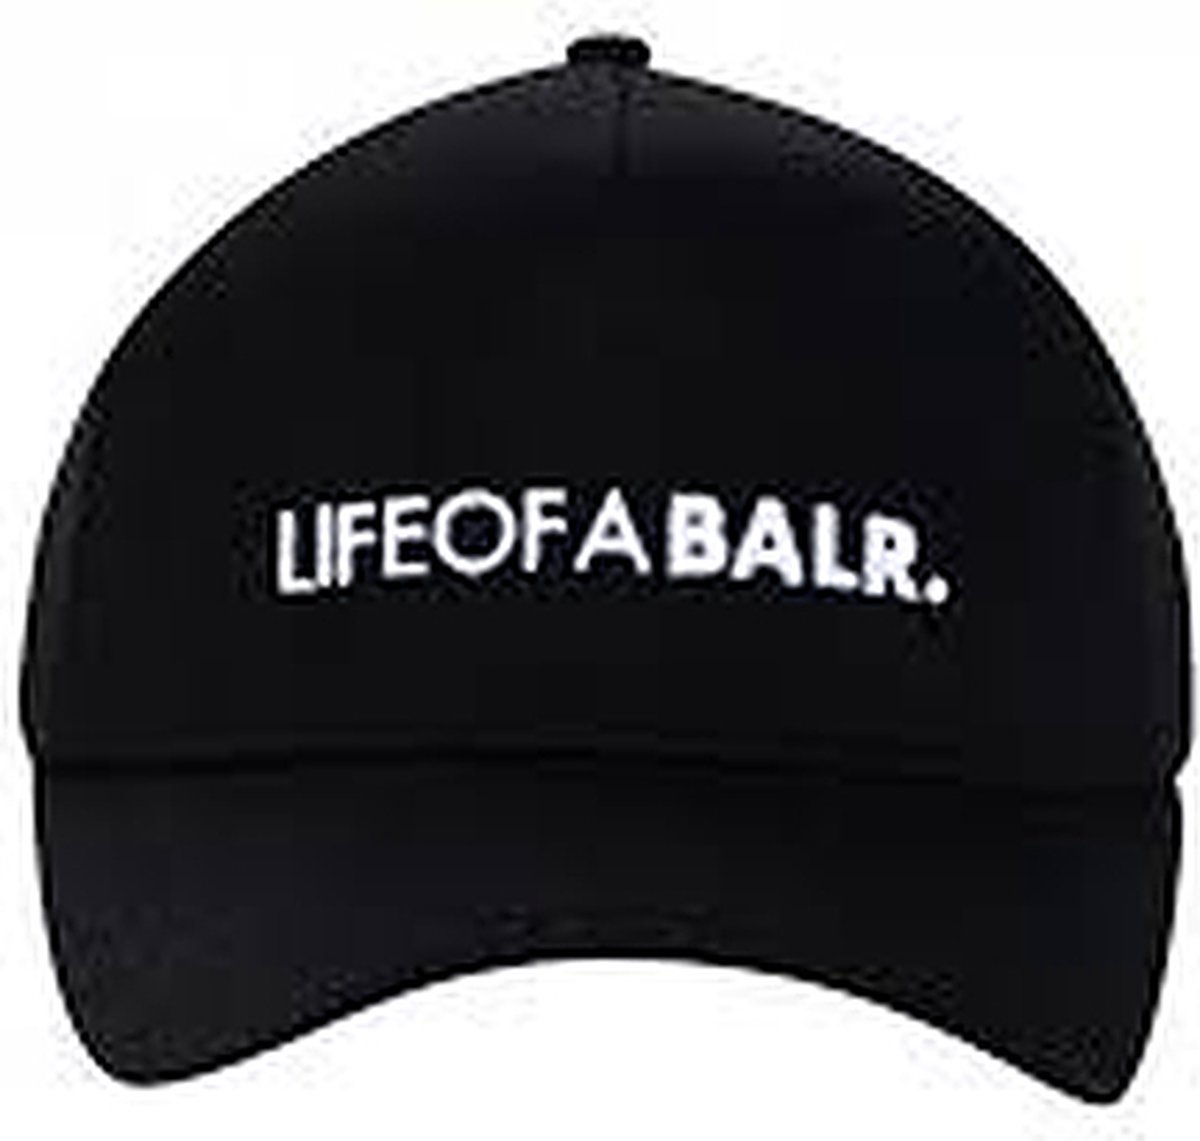 BALR. Lifeofabalr Cap